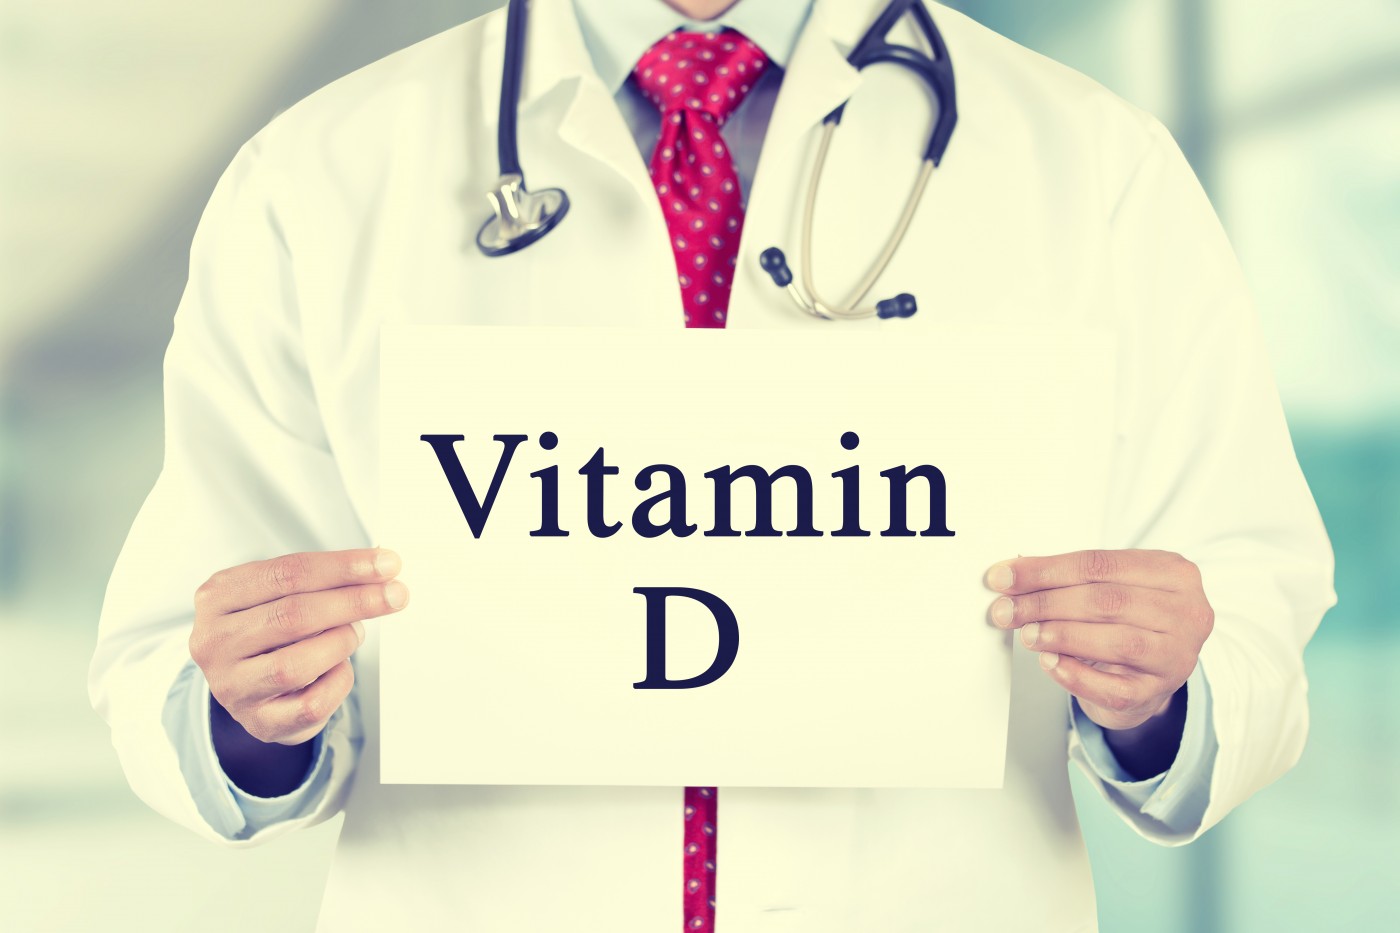 Vitamin D as a modifier of MS disease